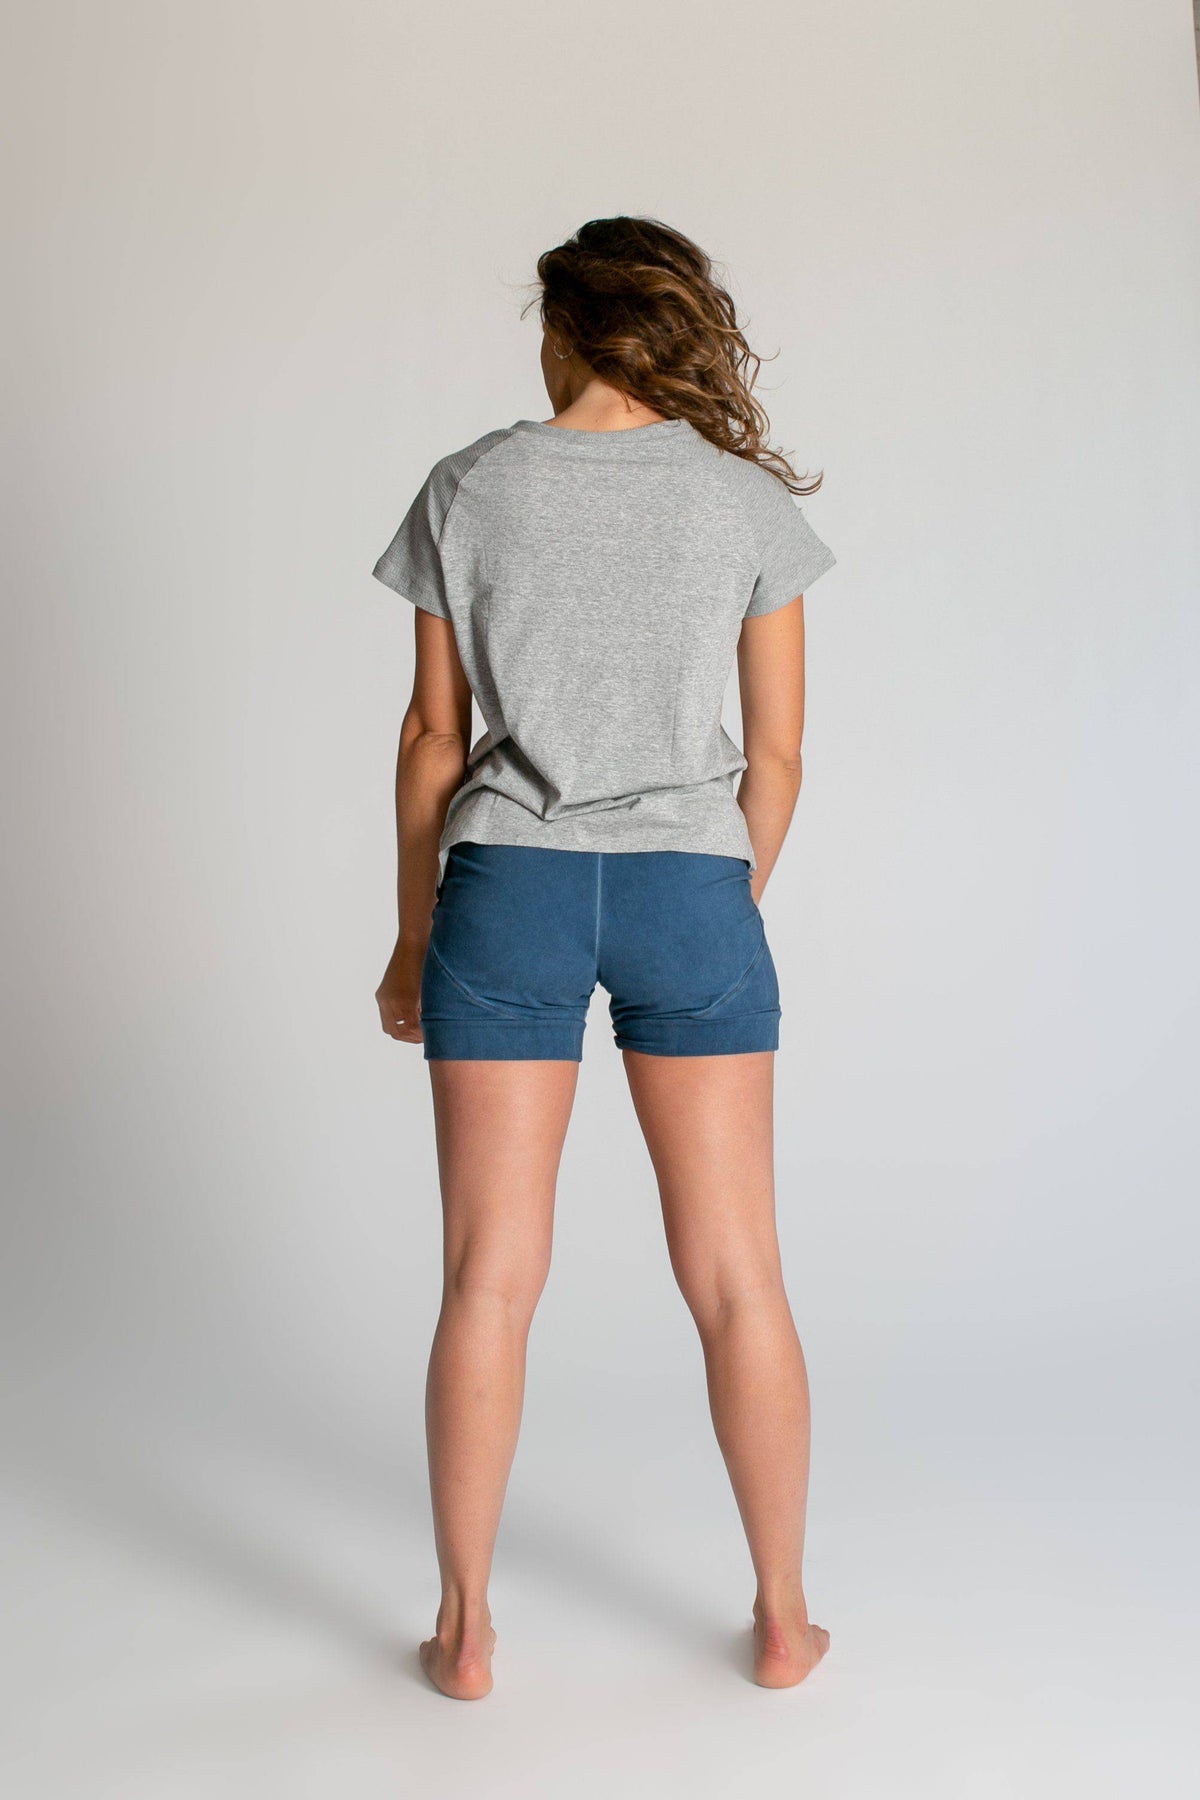 Limited Edition Raglan T-Shirt - womens clothing - Ripple Yoga Wear